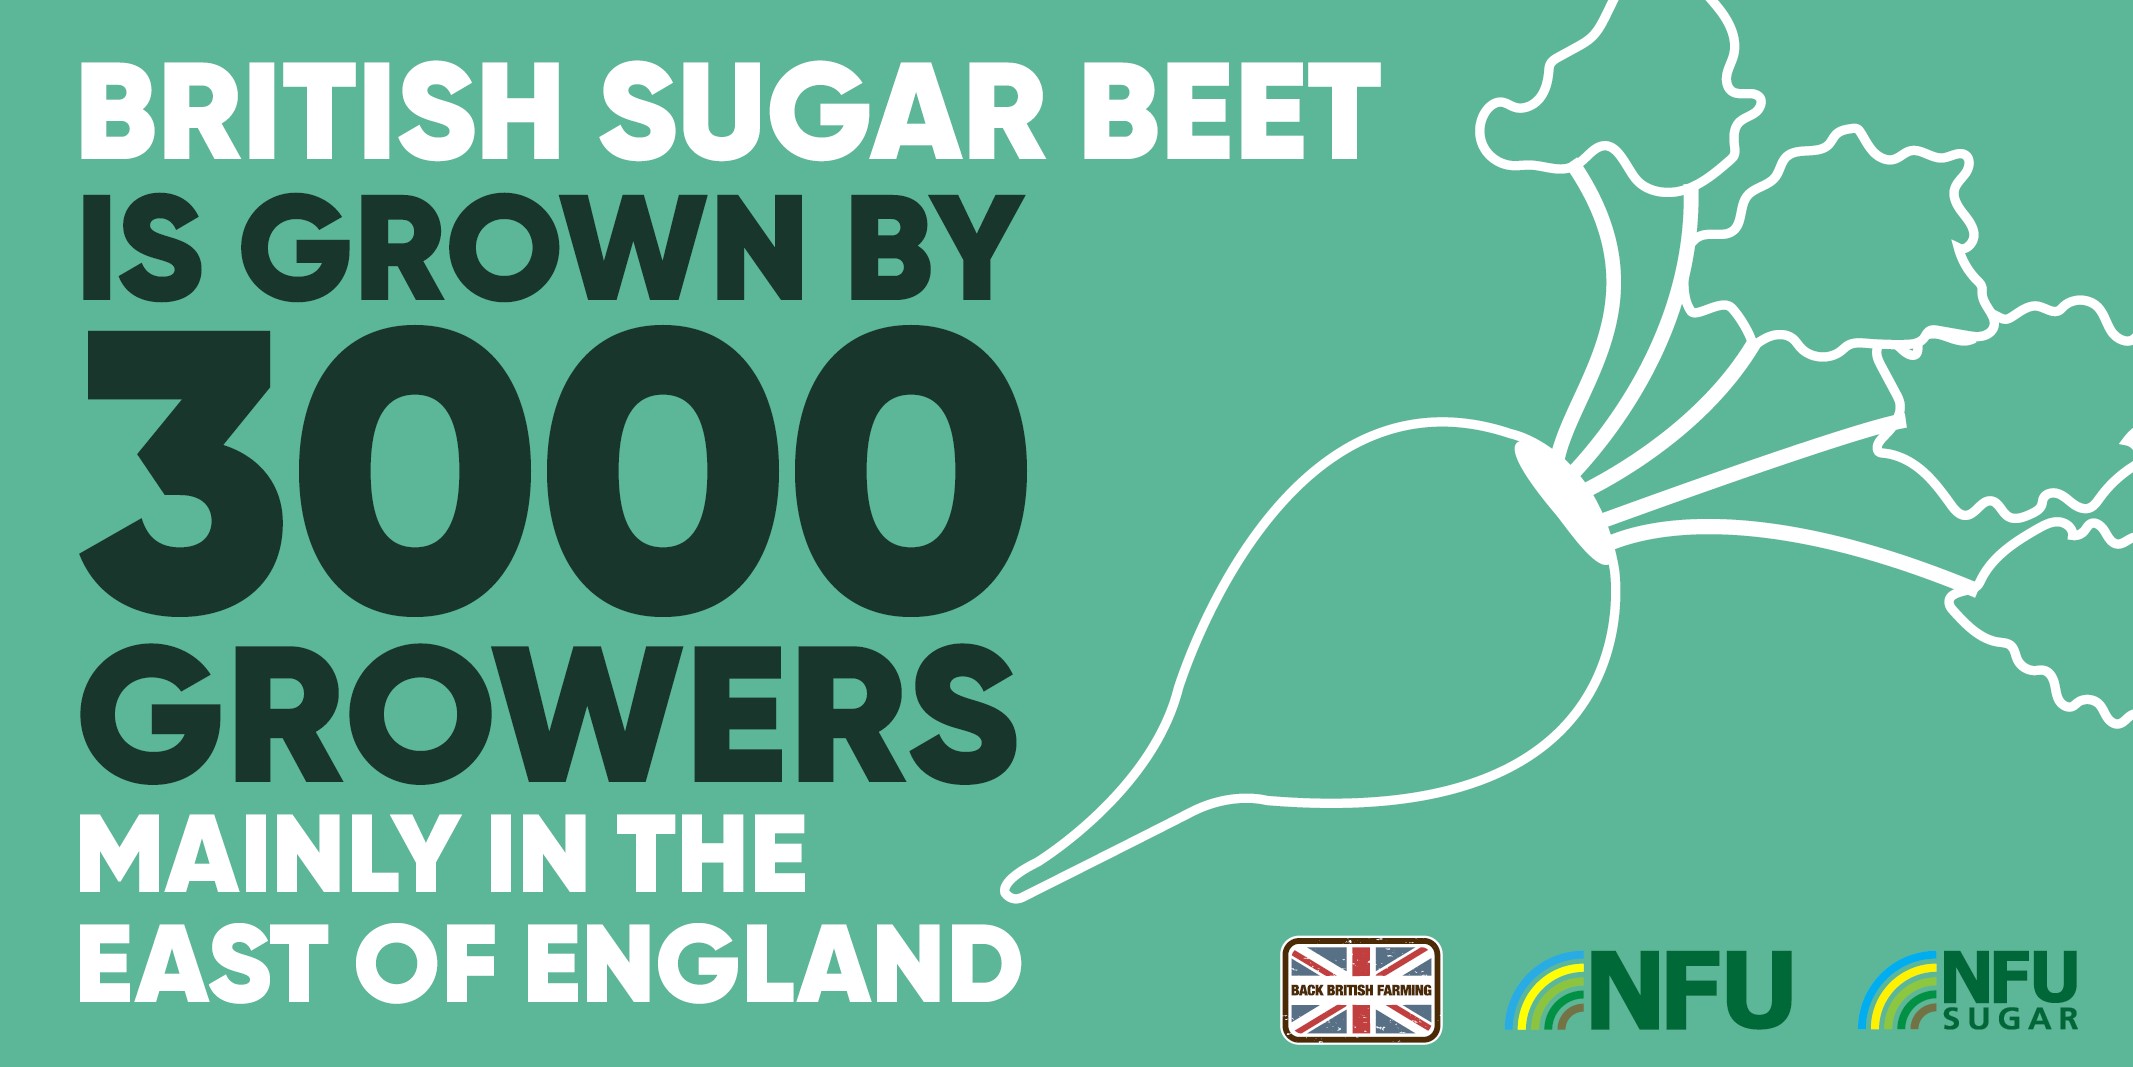 NFU Sugar infographic Twitter 300 growers